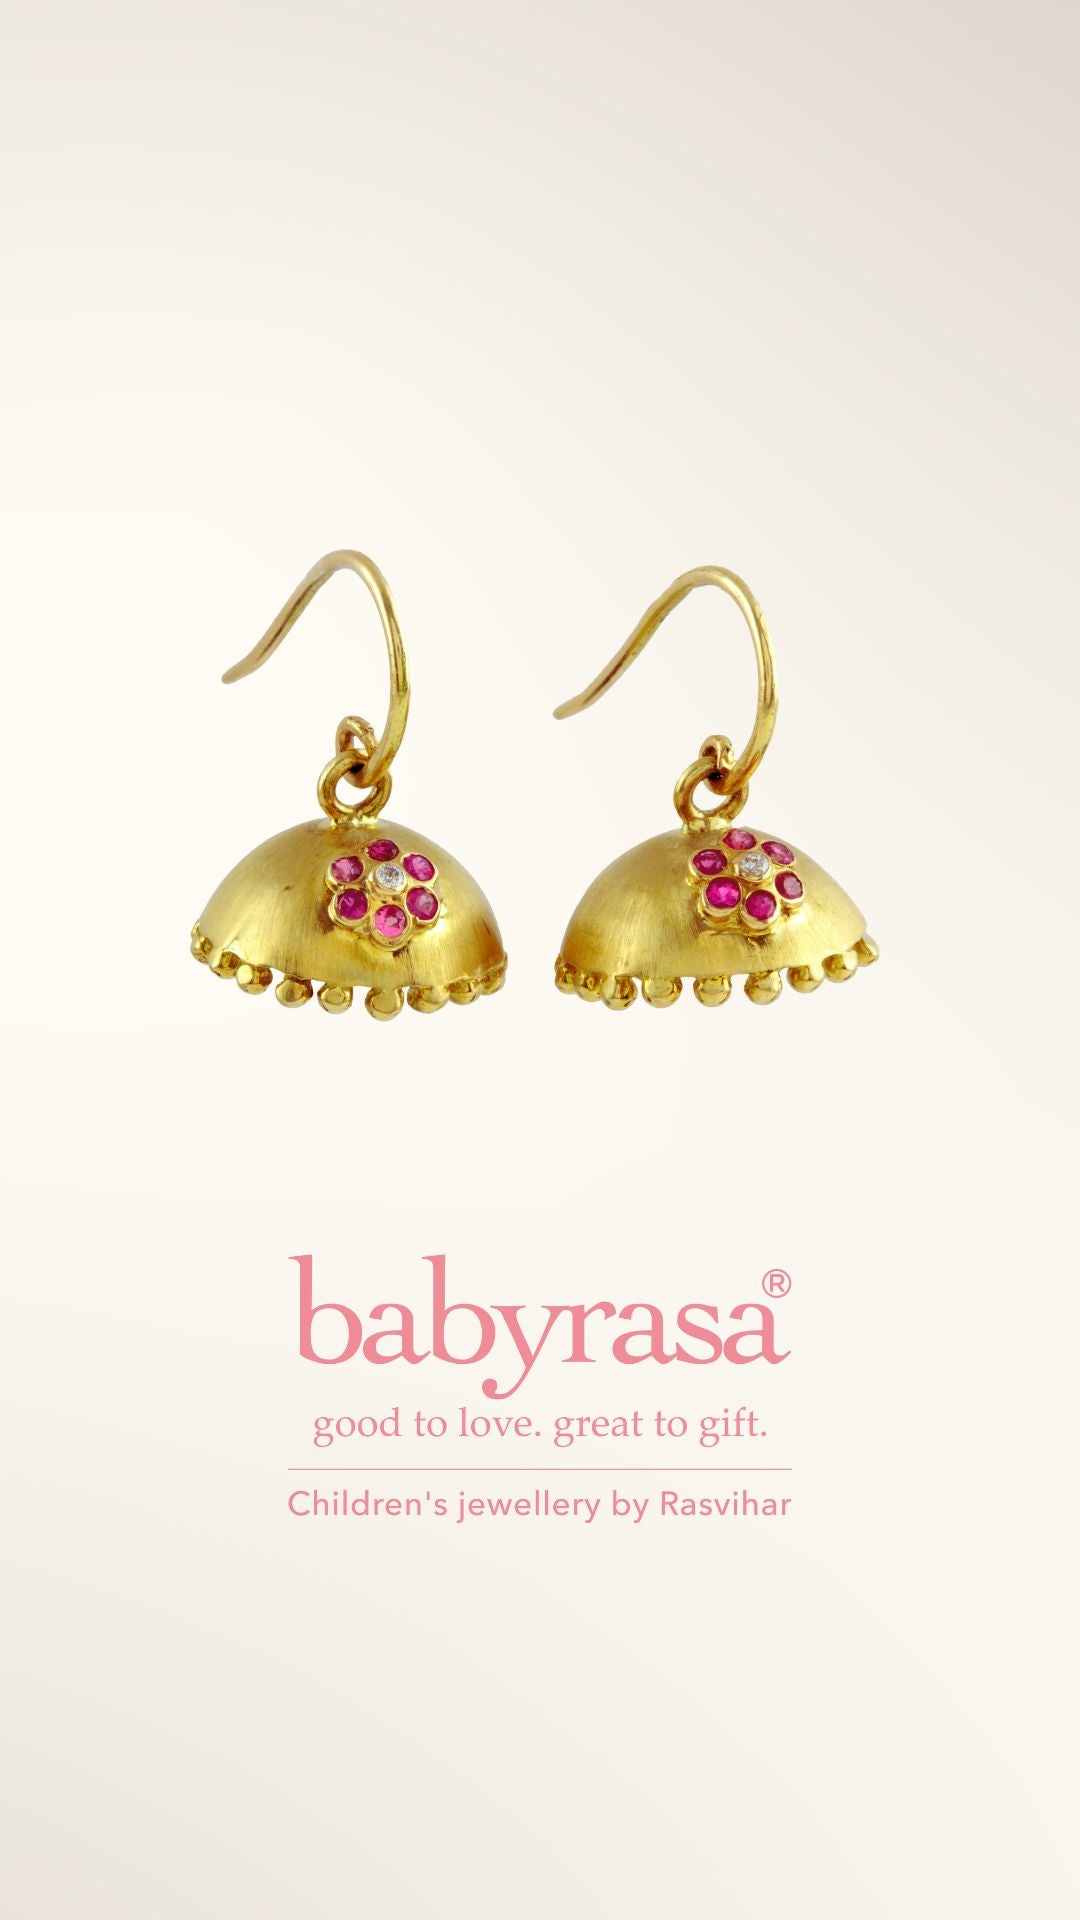 The Babyrasa Rupa Gold, Diamond and Ruby Jhumka by Rasvihar